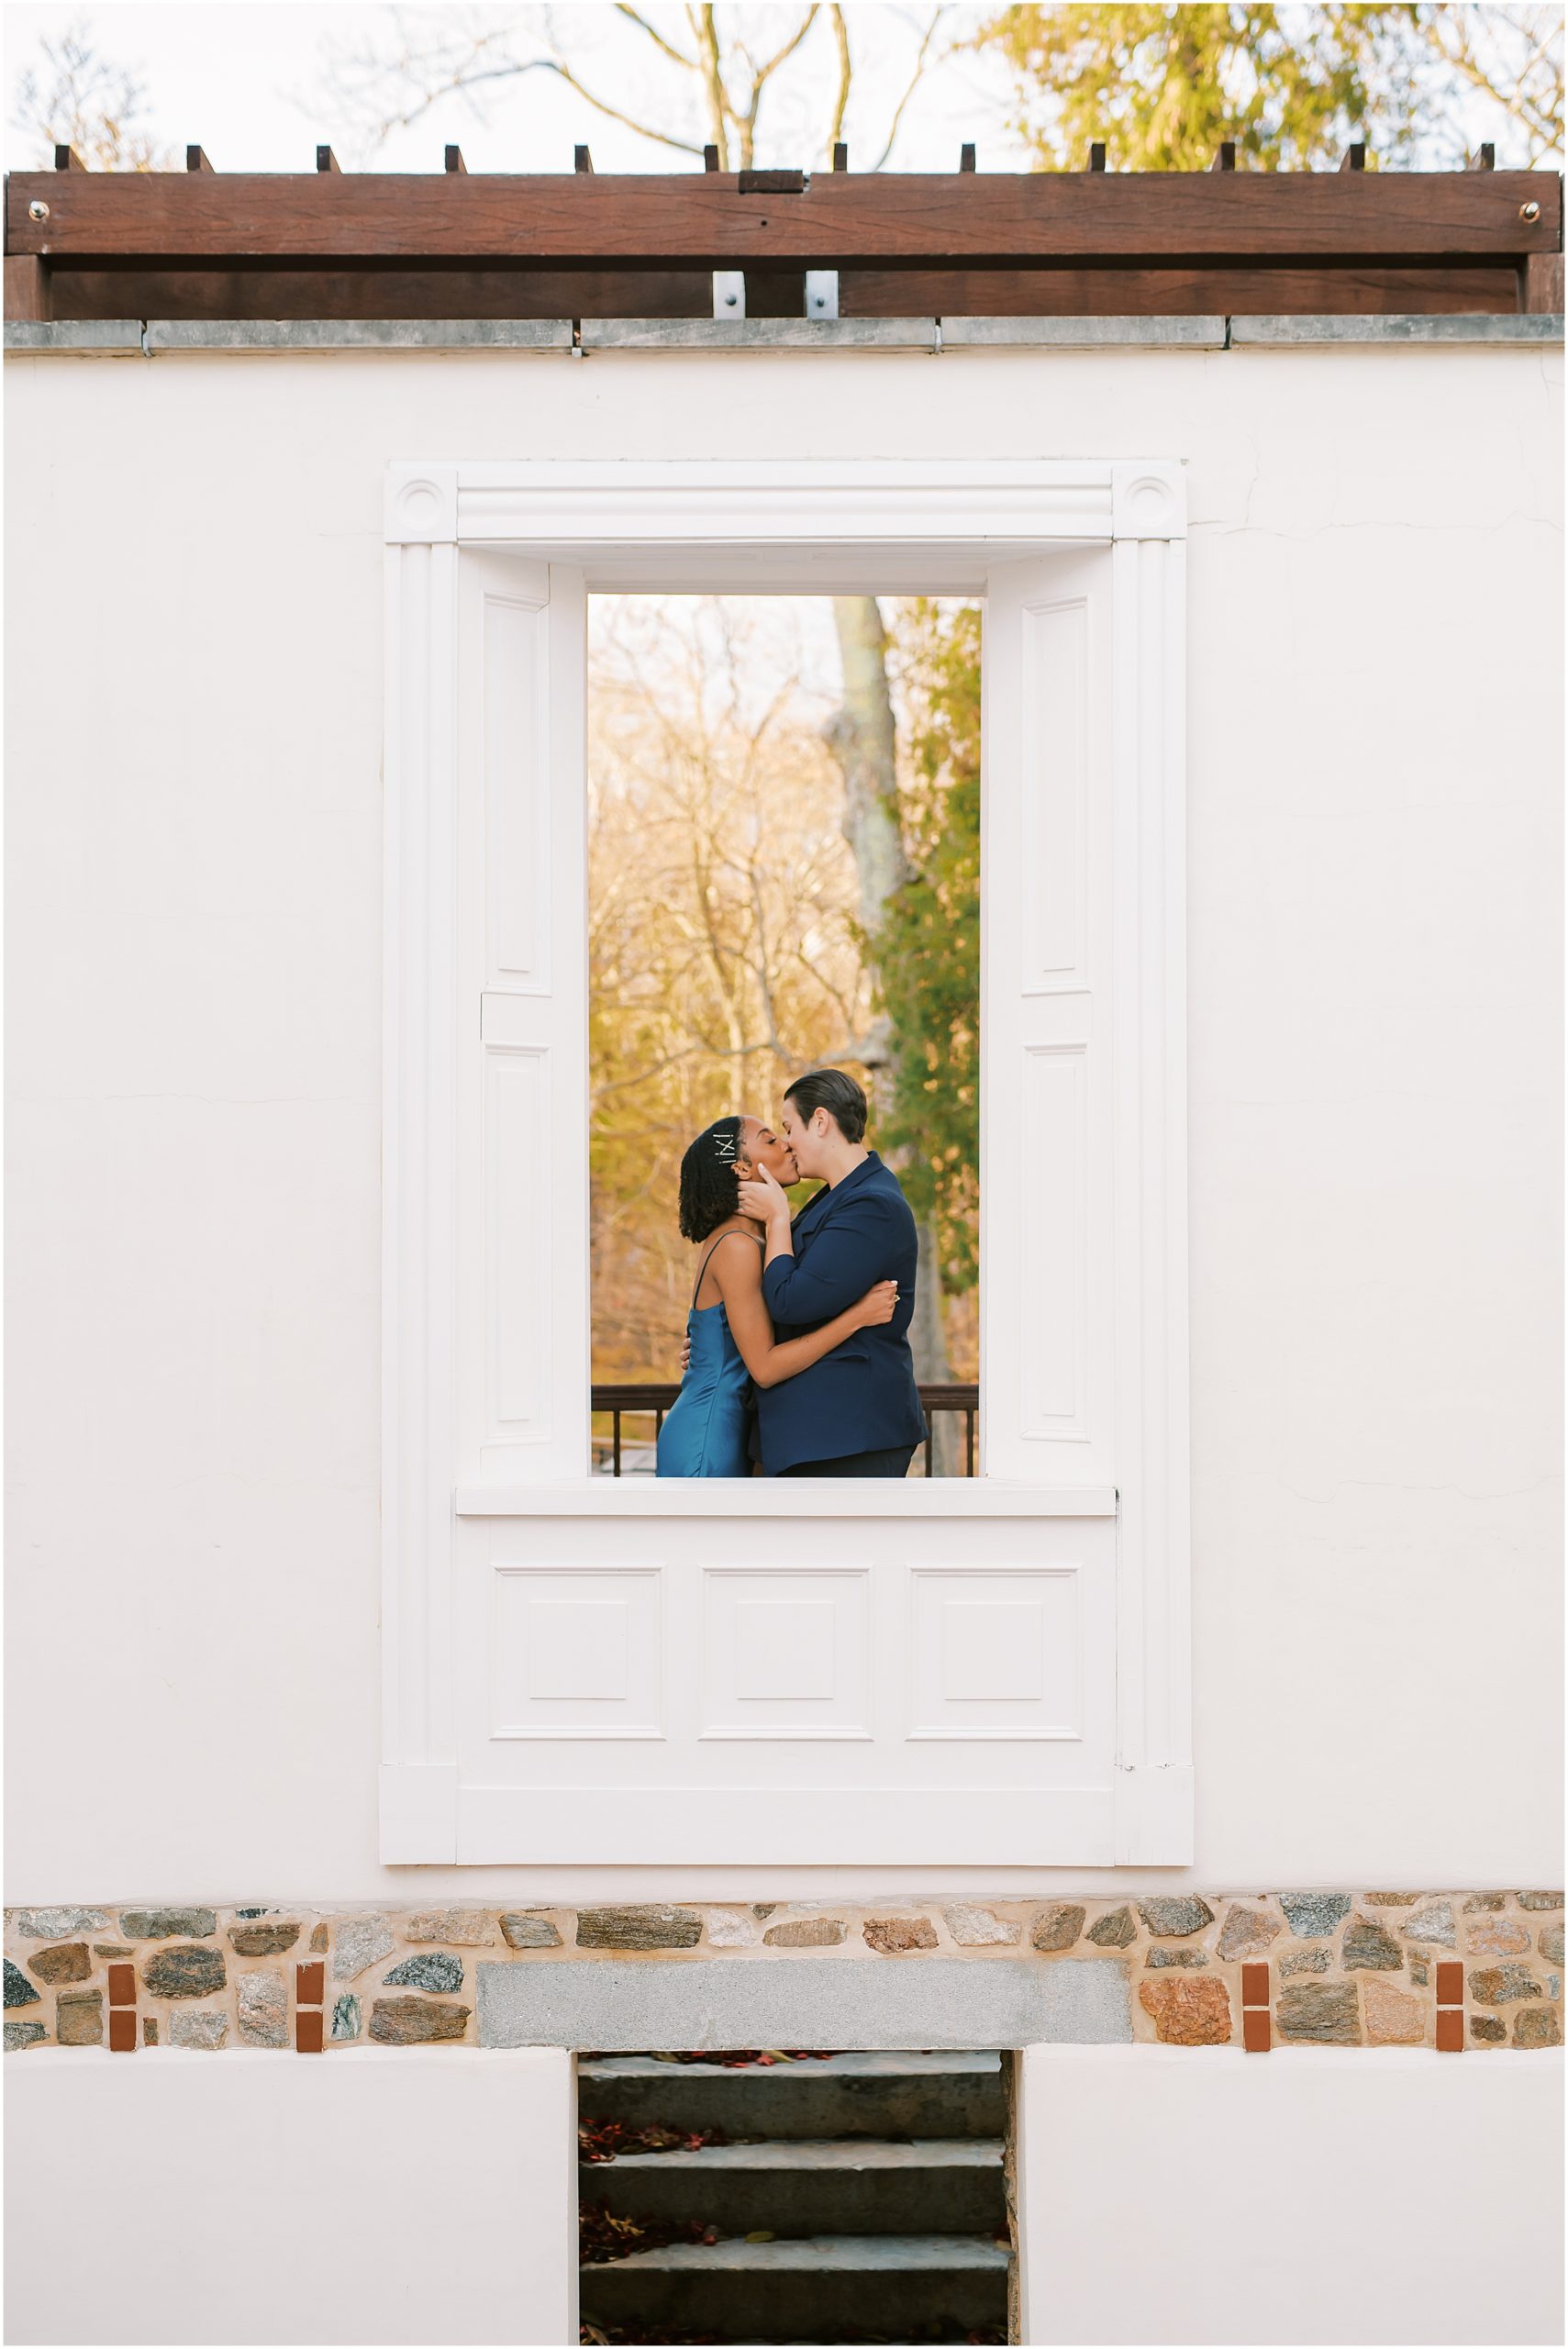 Couple kissing through window